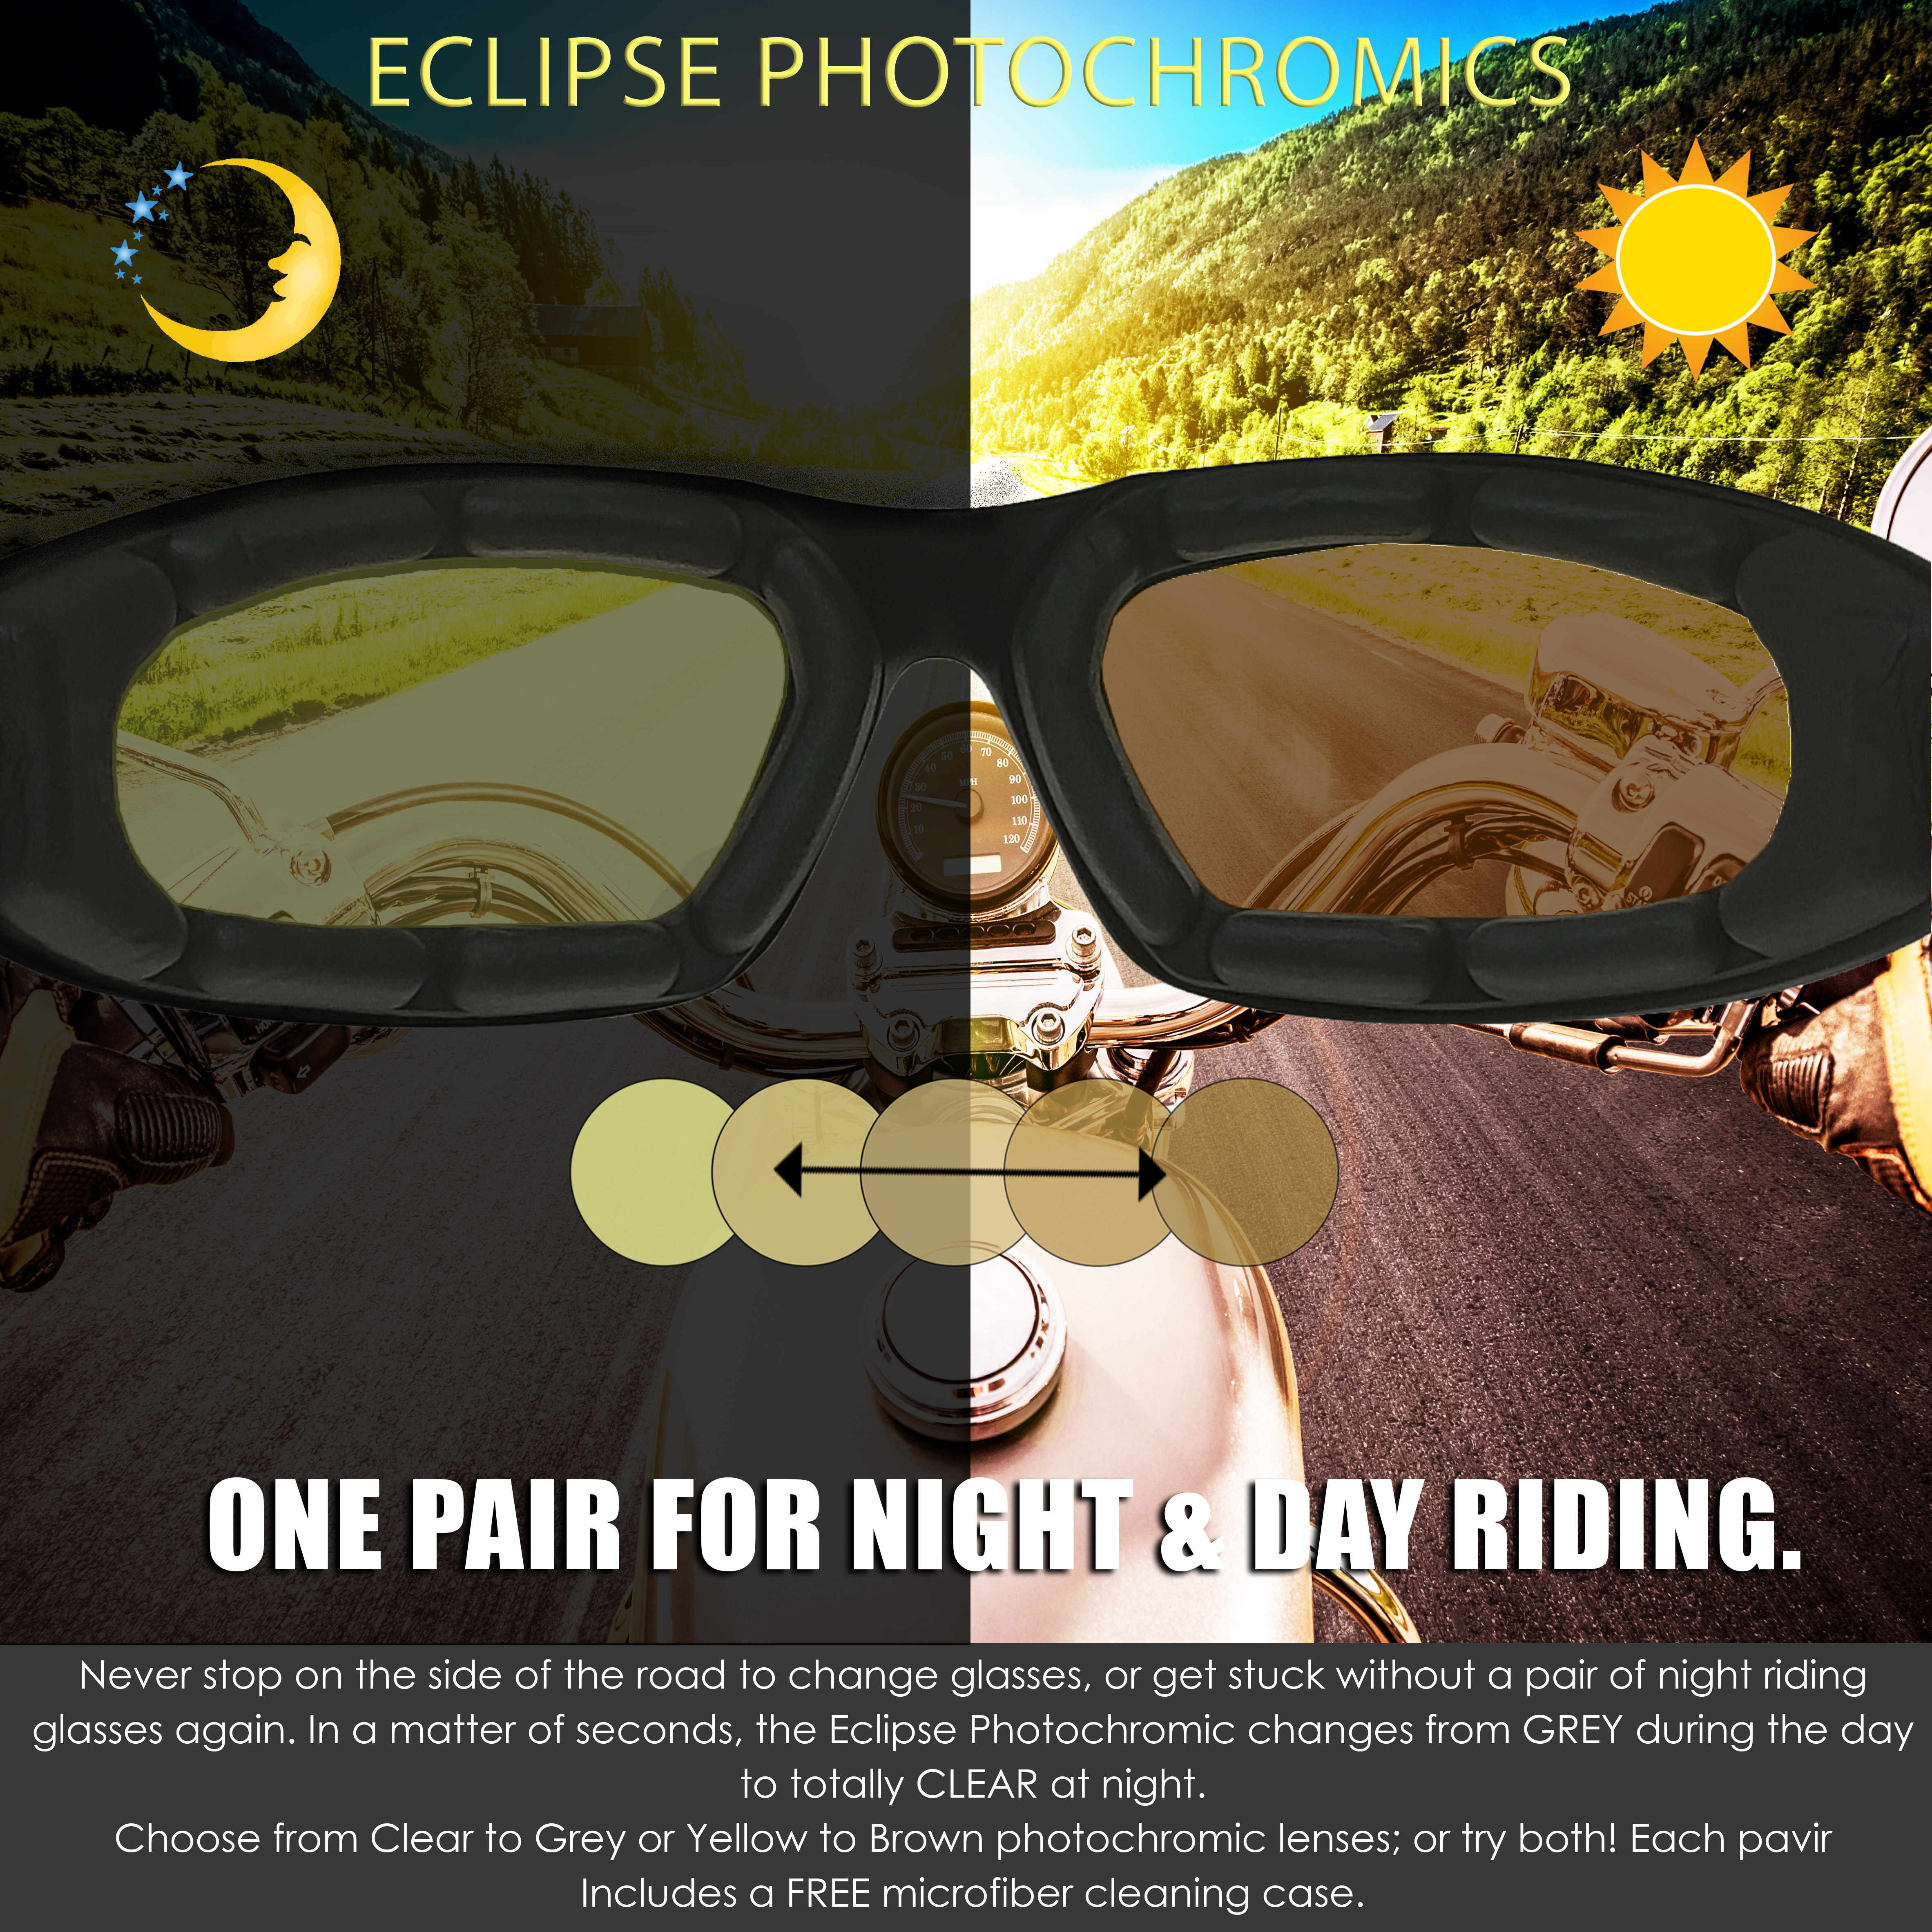 Bikershades Motorcycle Transitional Sunglass Day Night Riding Photochromic Black Yellow - image 5 of 6